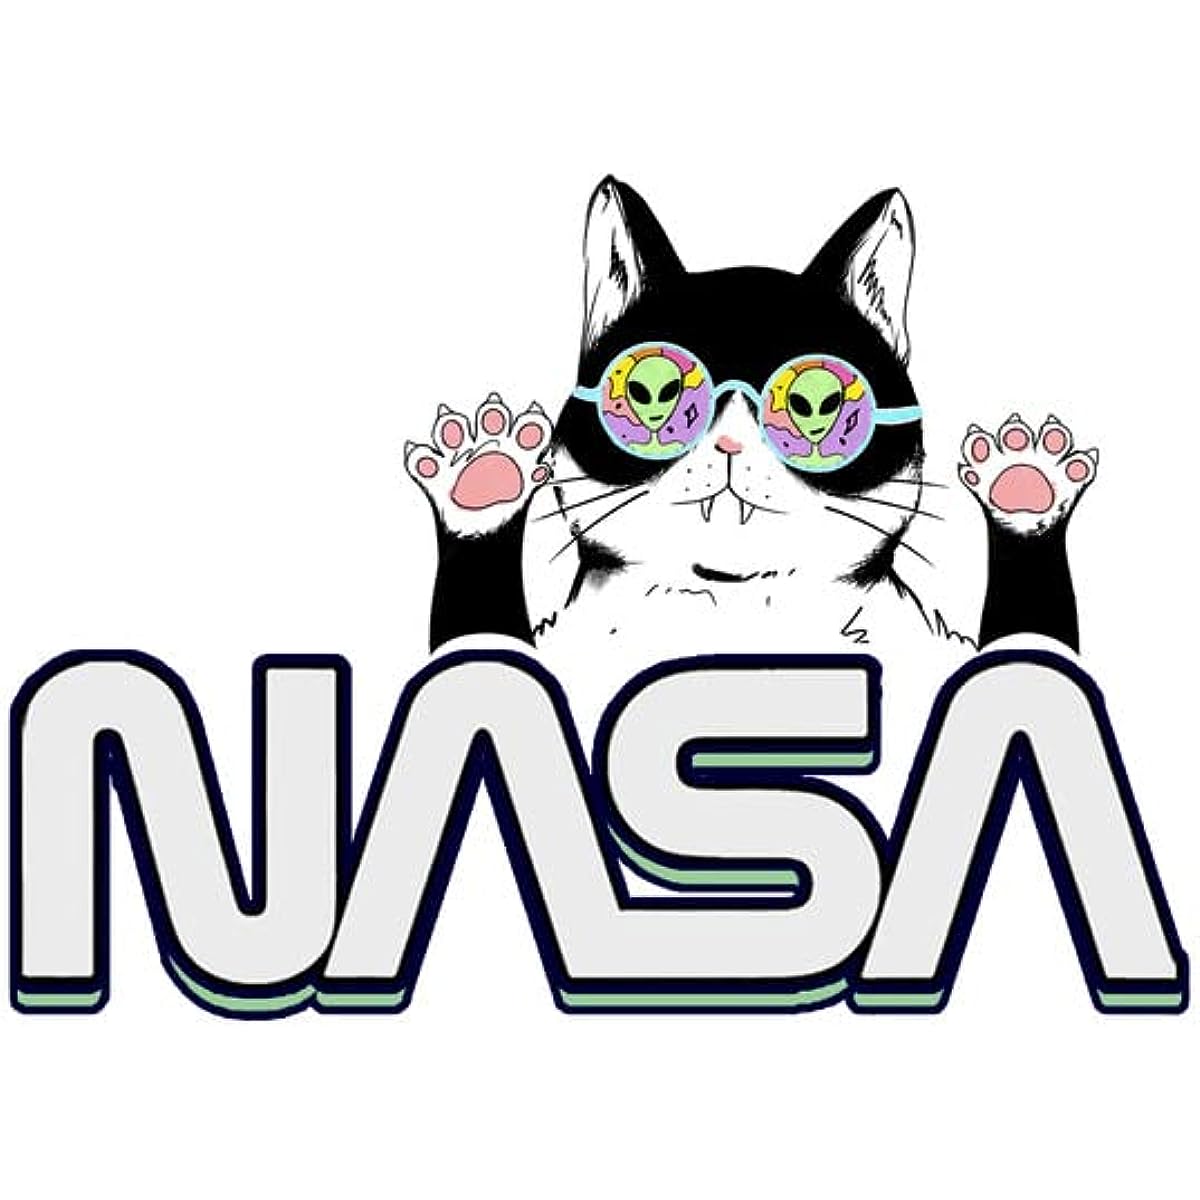 CORIRESHA Camiseta unisex de la NASA casual verano cuello redondo manga corta lindo gato Top